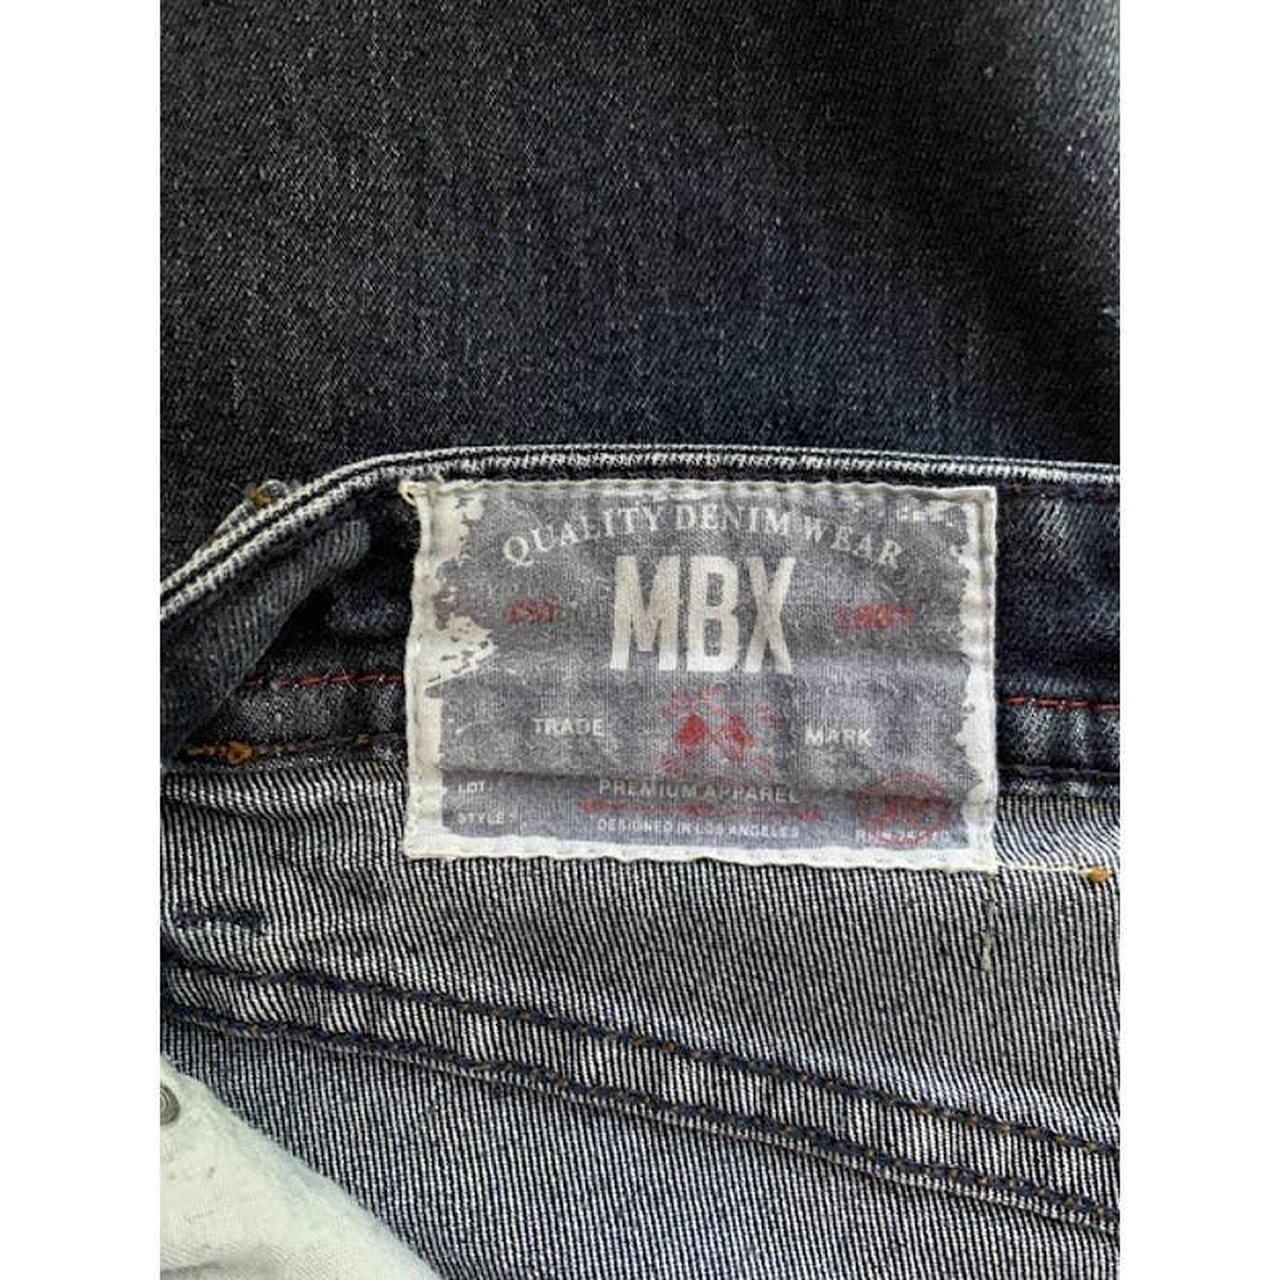 MBX Jeans Slim Stretch Size 36X32 Missing the... - Depop